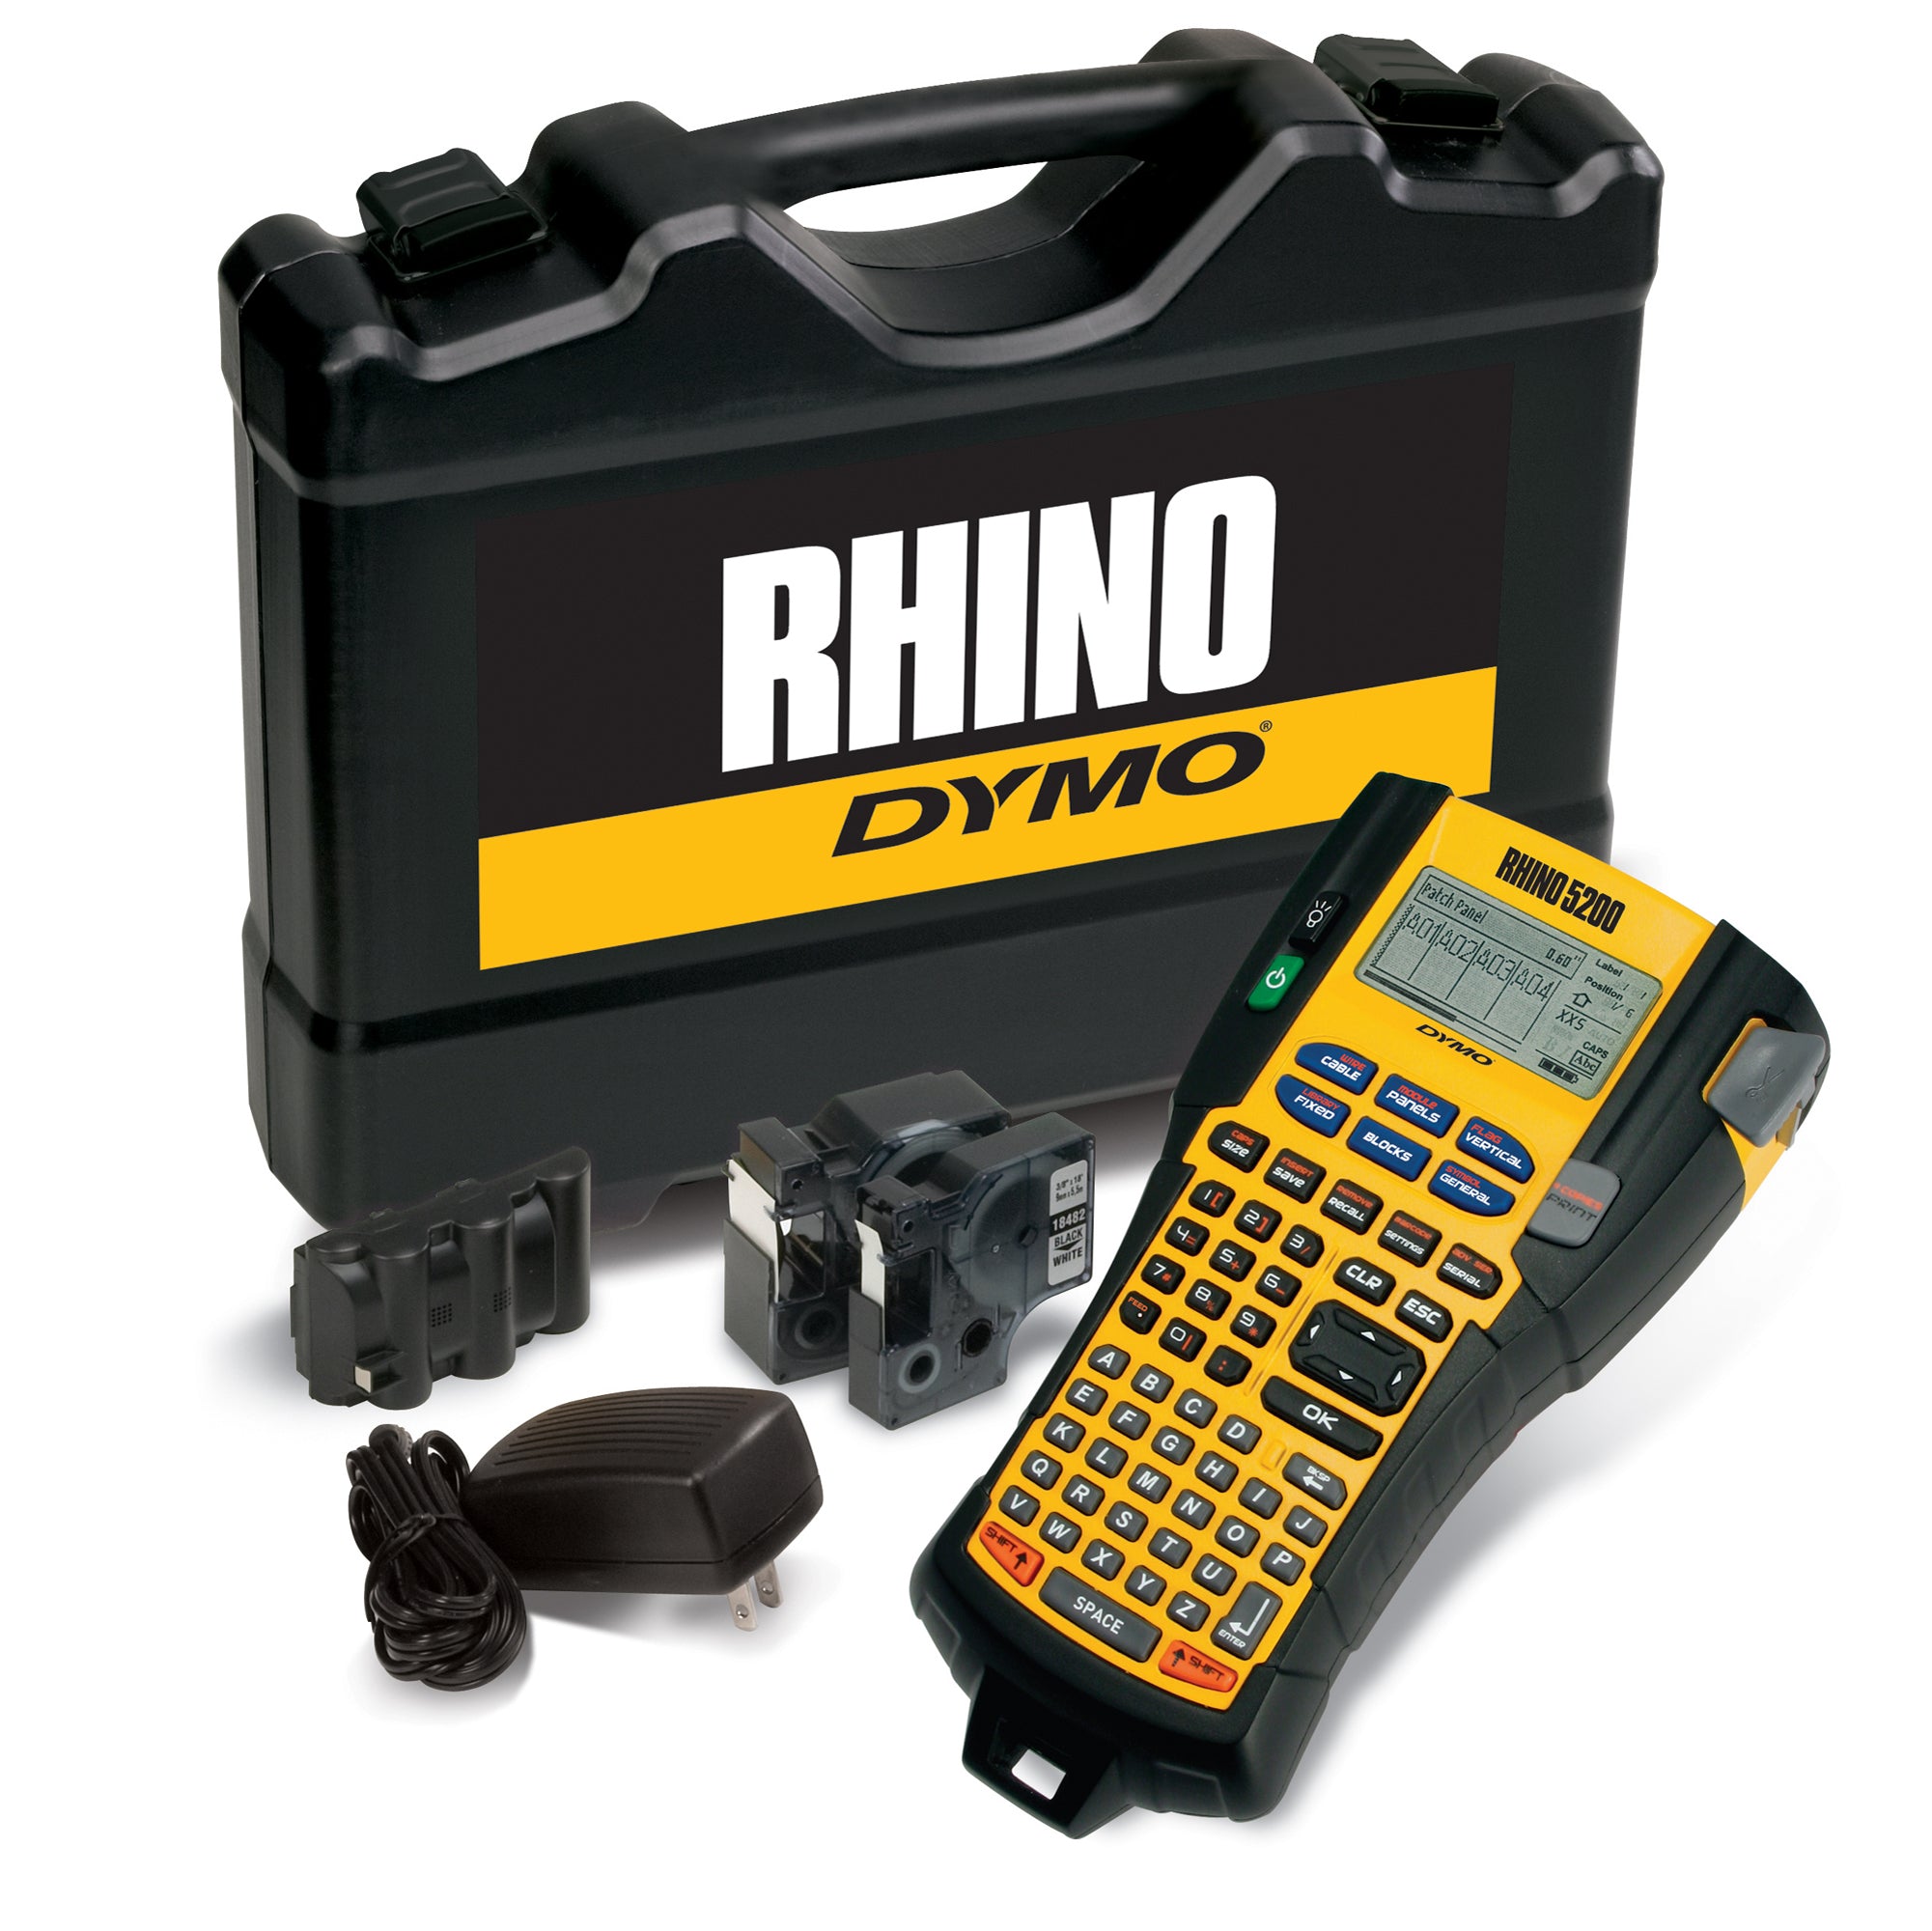 dymo-etichettatrice-industriale-rhino-5200-kit